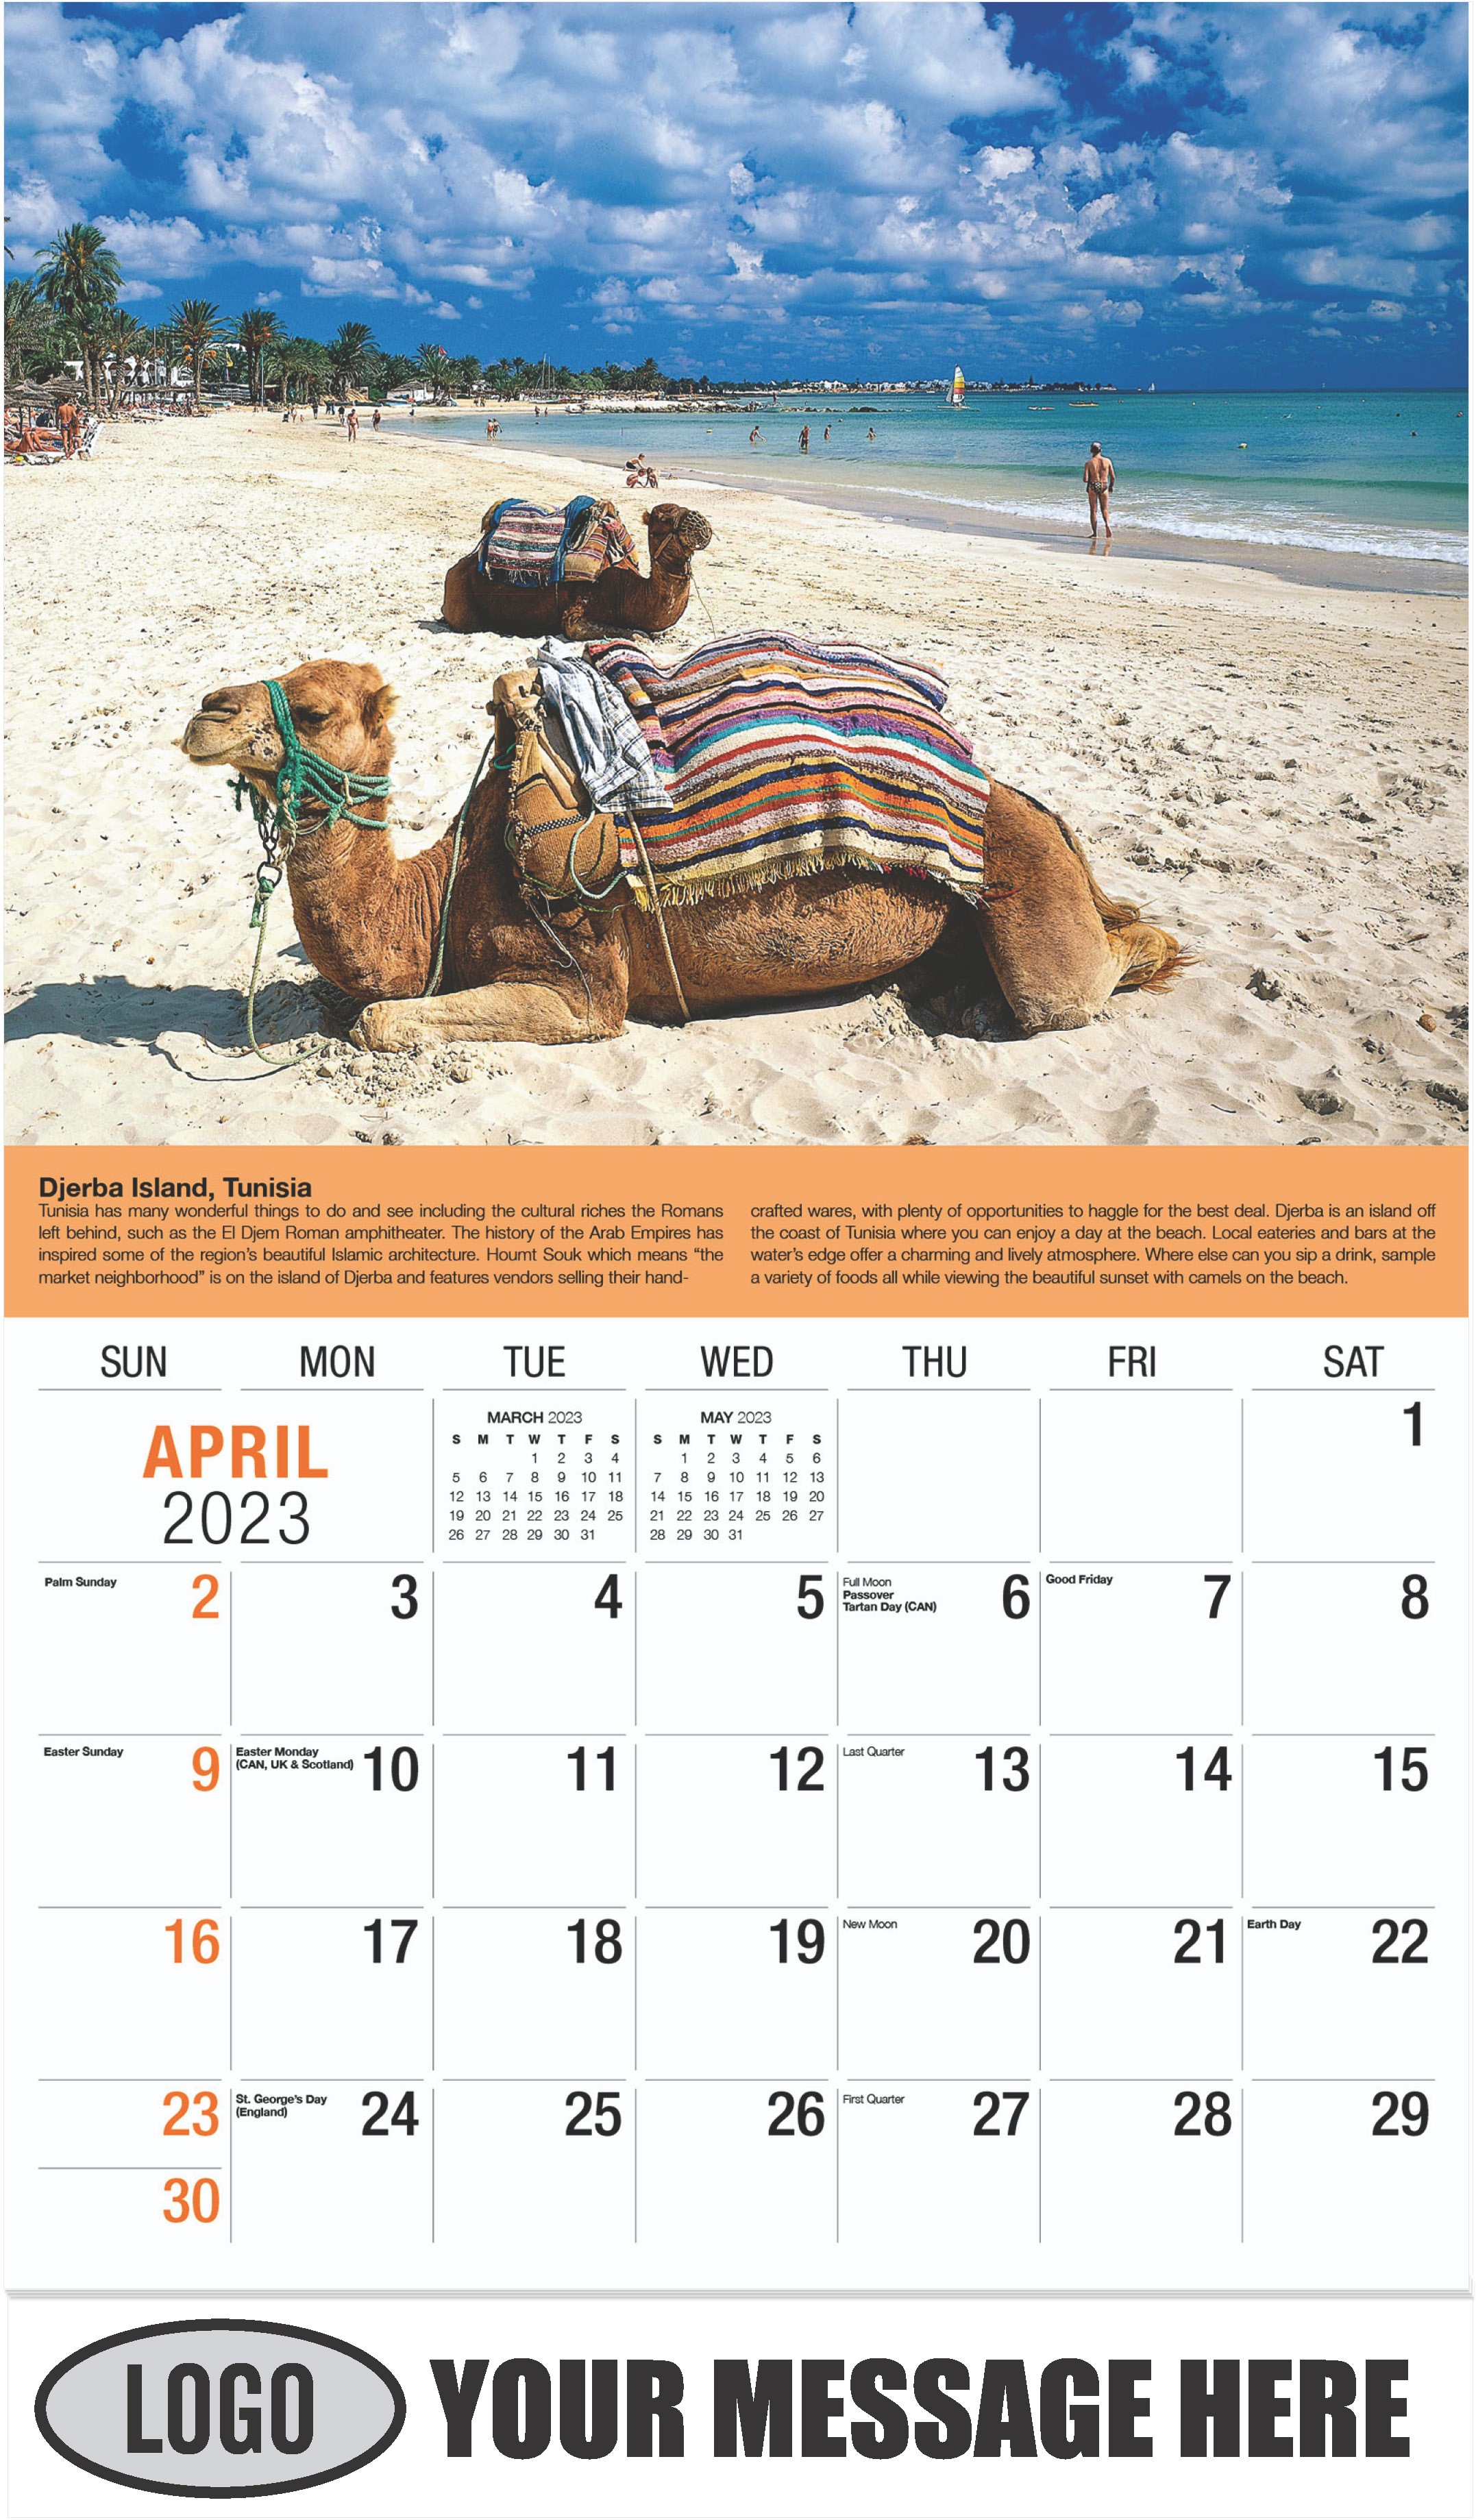 Seguia Beach, Djerba, Tunisia - April - World Travel 2023 Promotional Calendar